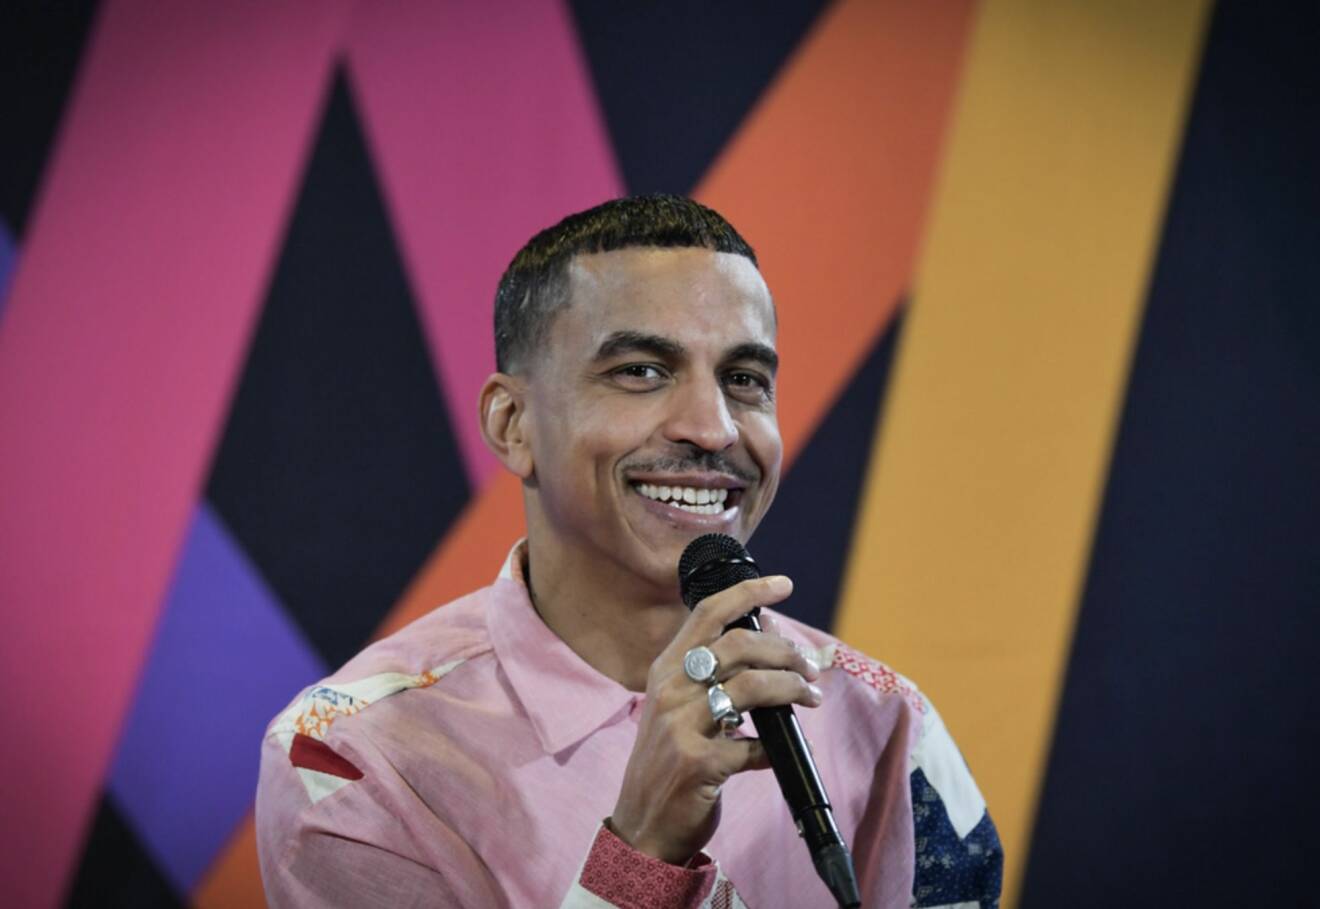 Jason Timbuktu programledare i deltävling 3 i Melodifestivalen 2021